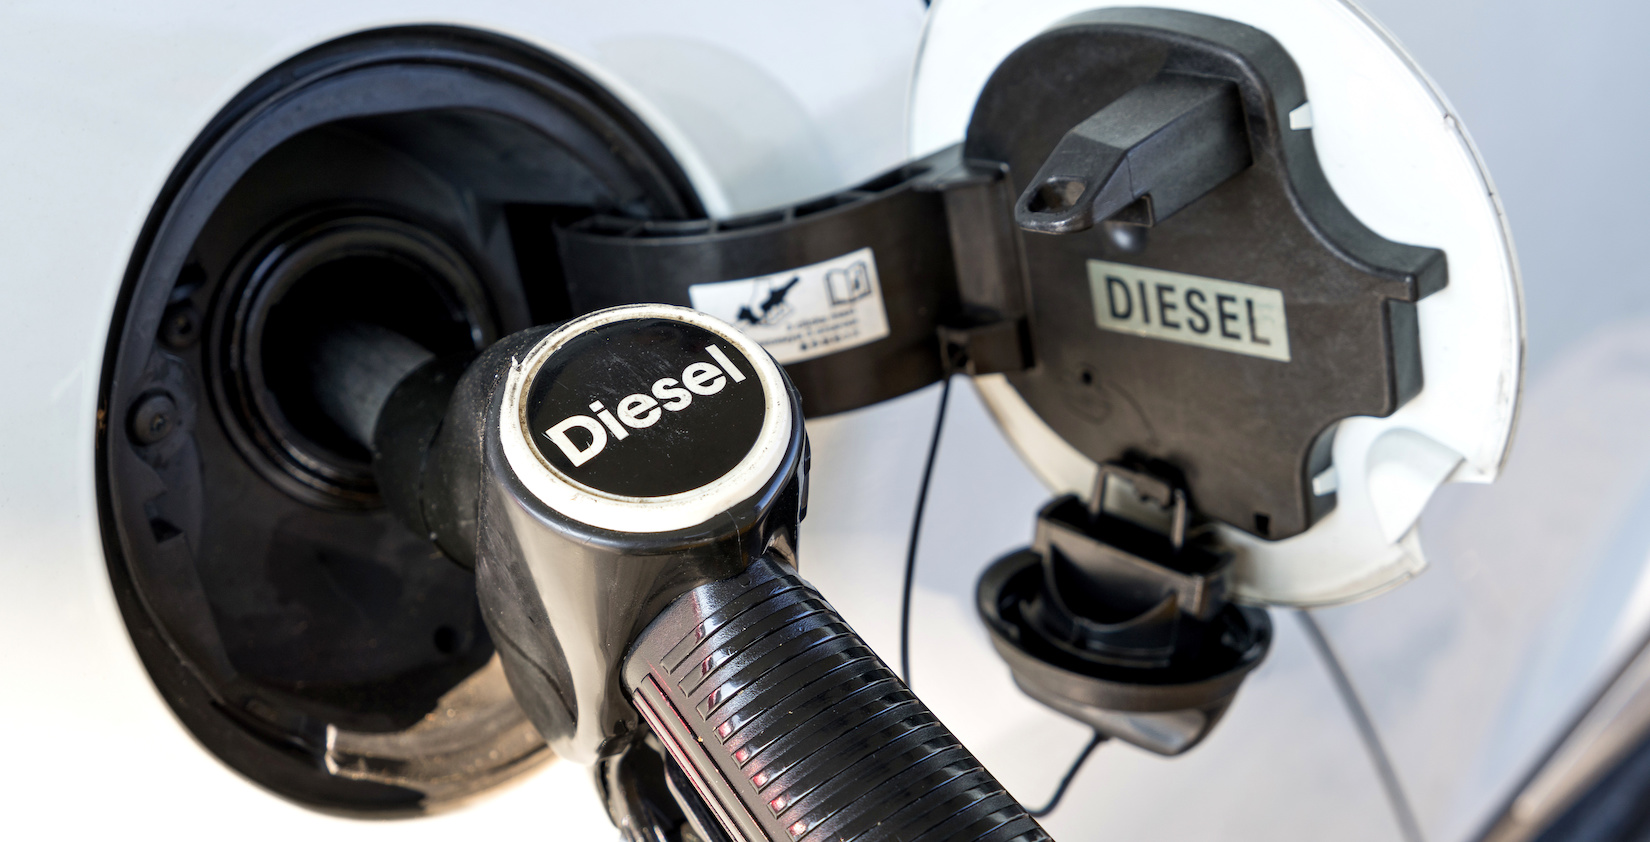 Diesel fuel nozzle in a car